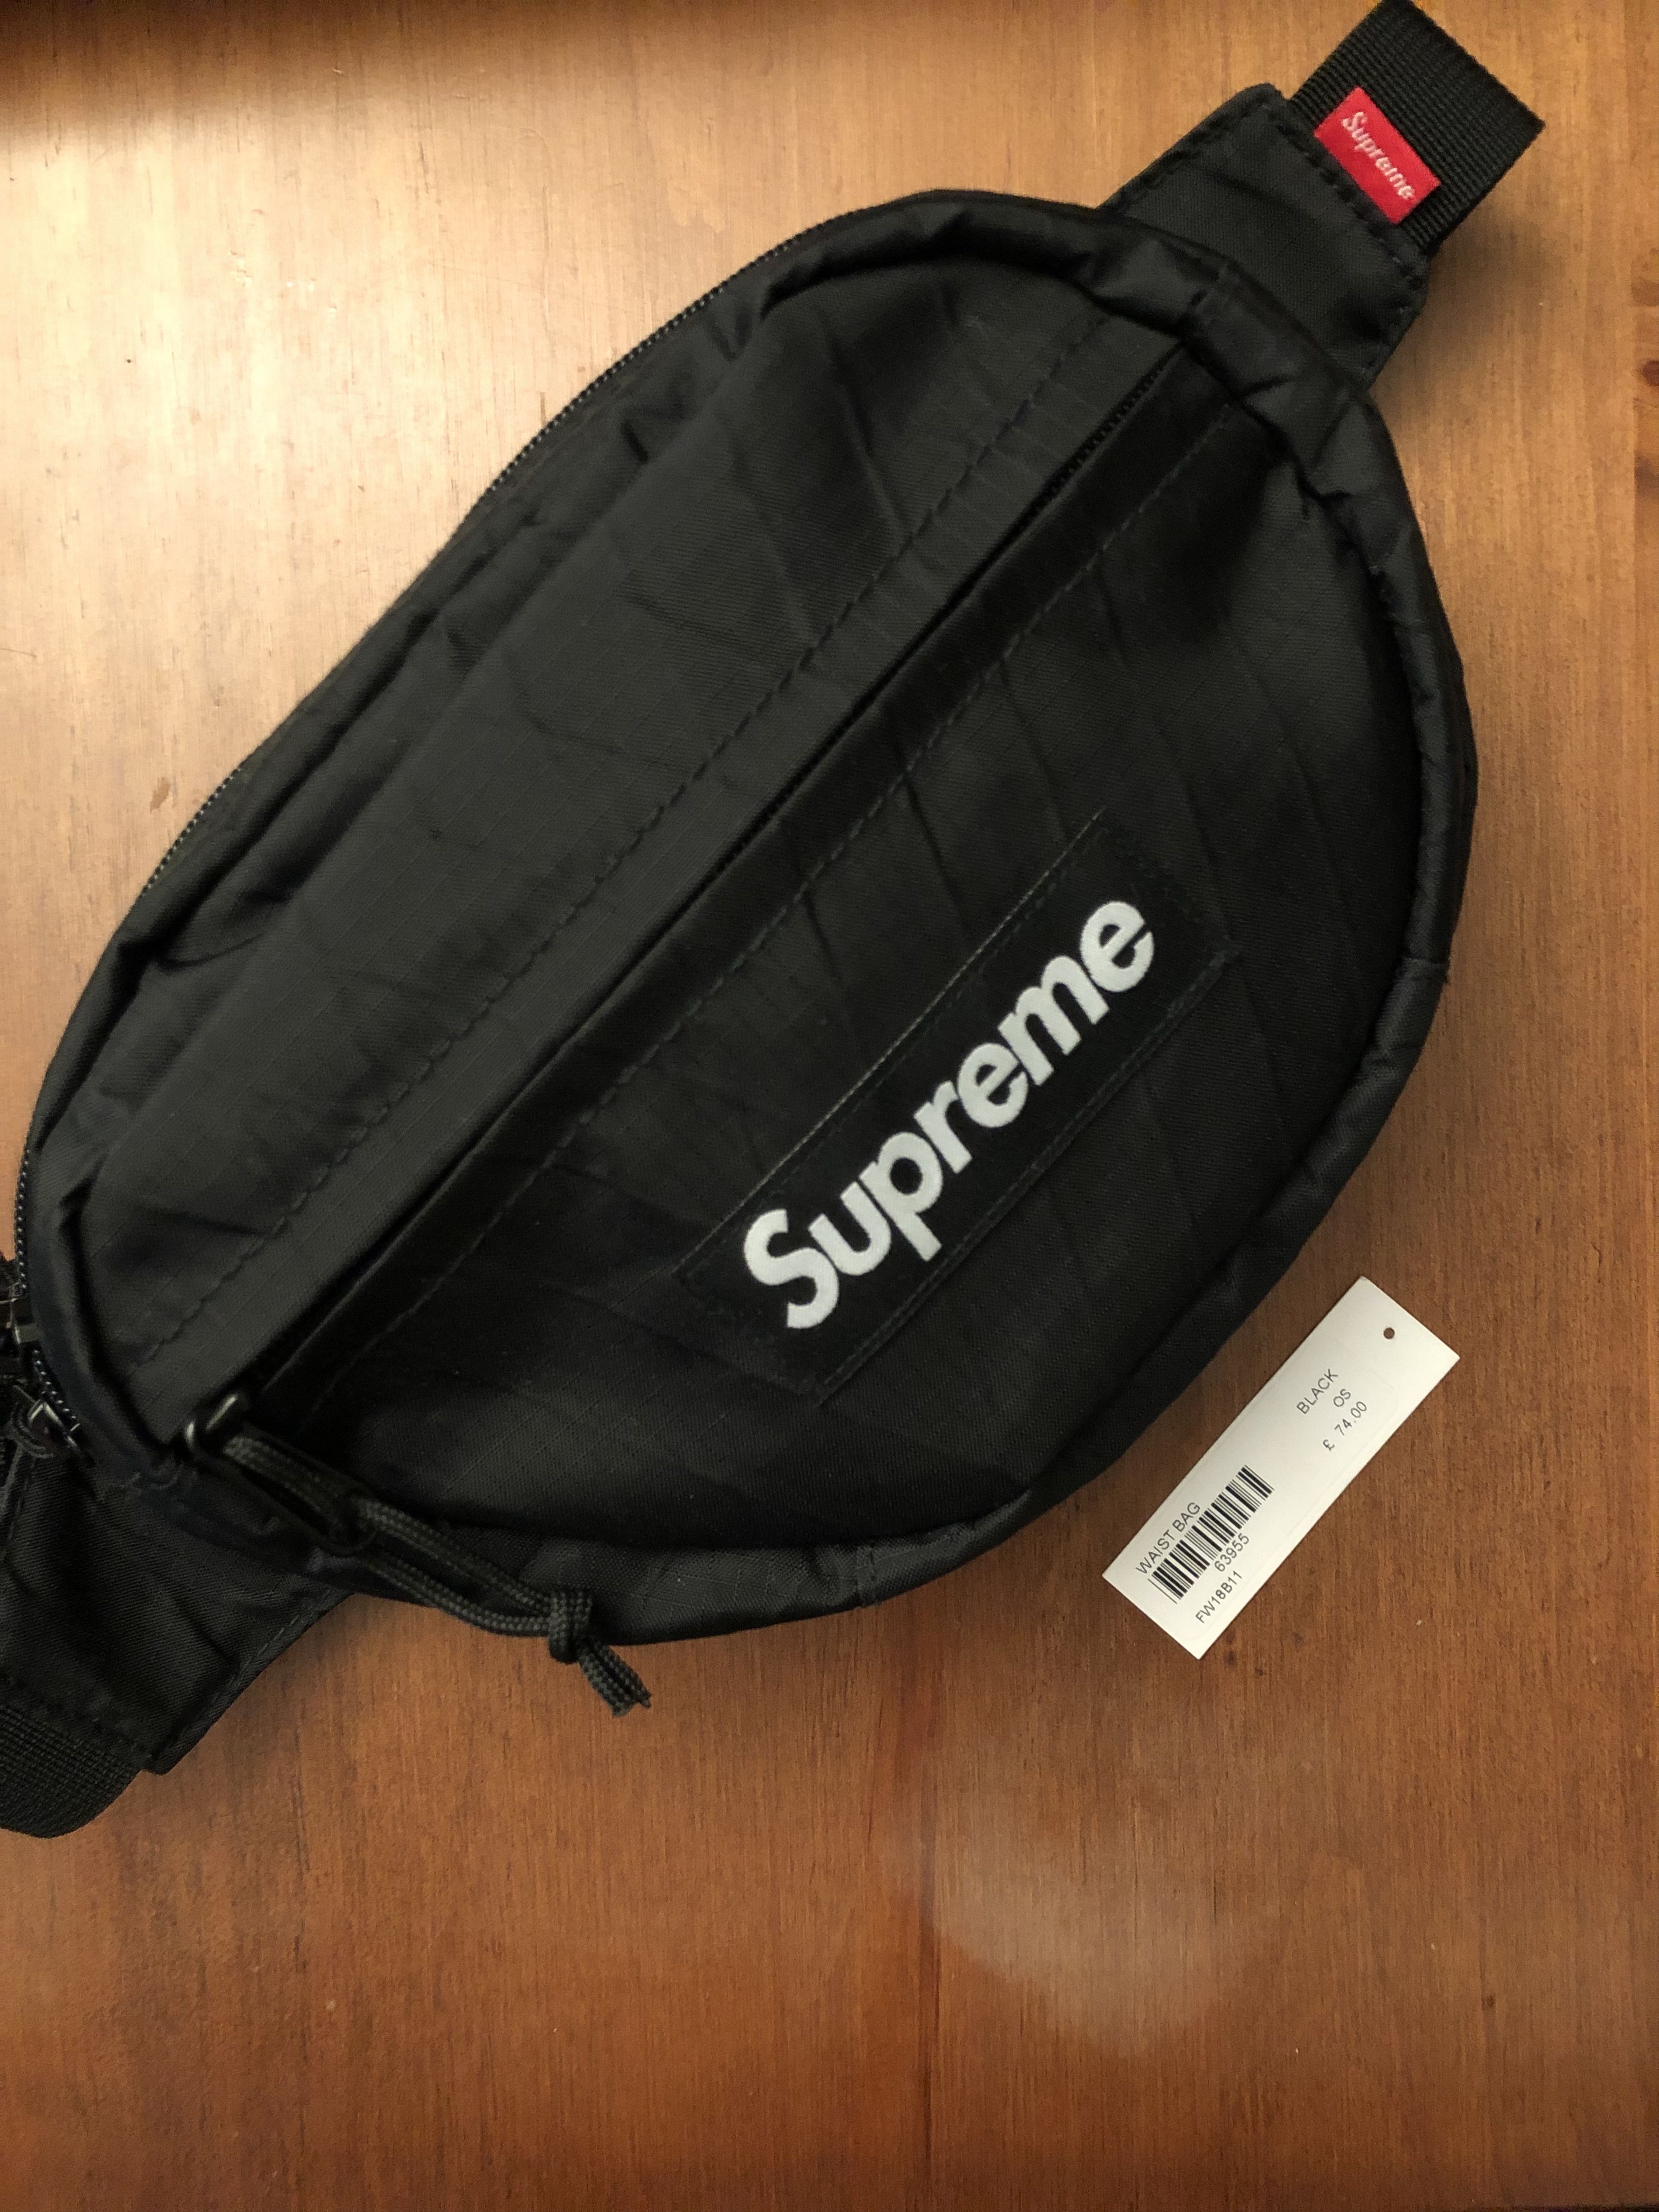 Supreme Waist Bag 2018 (FW18B11) One Size